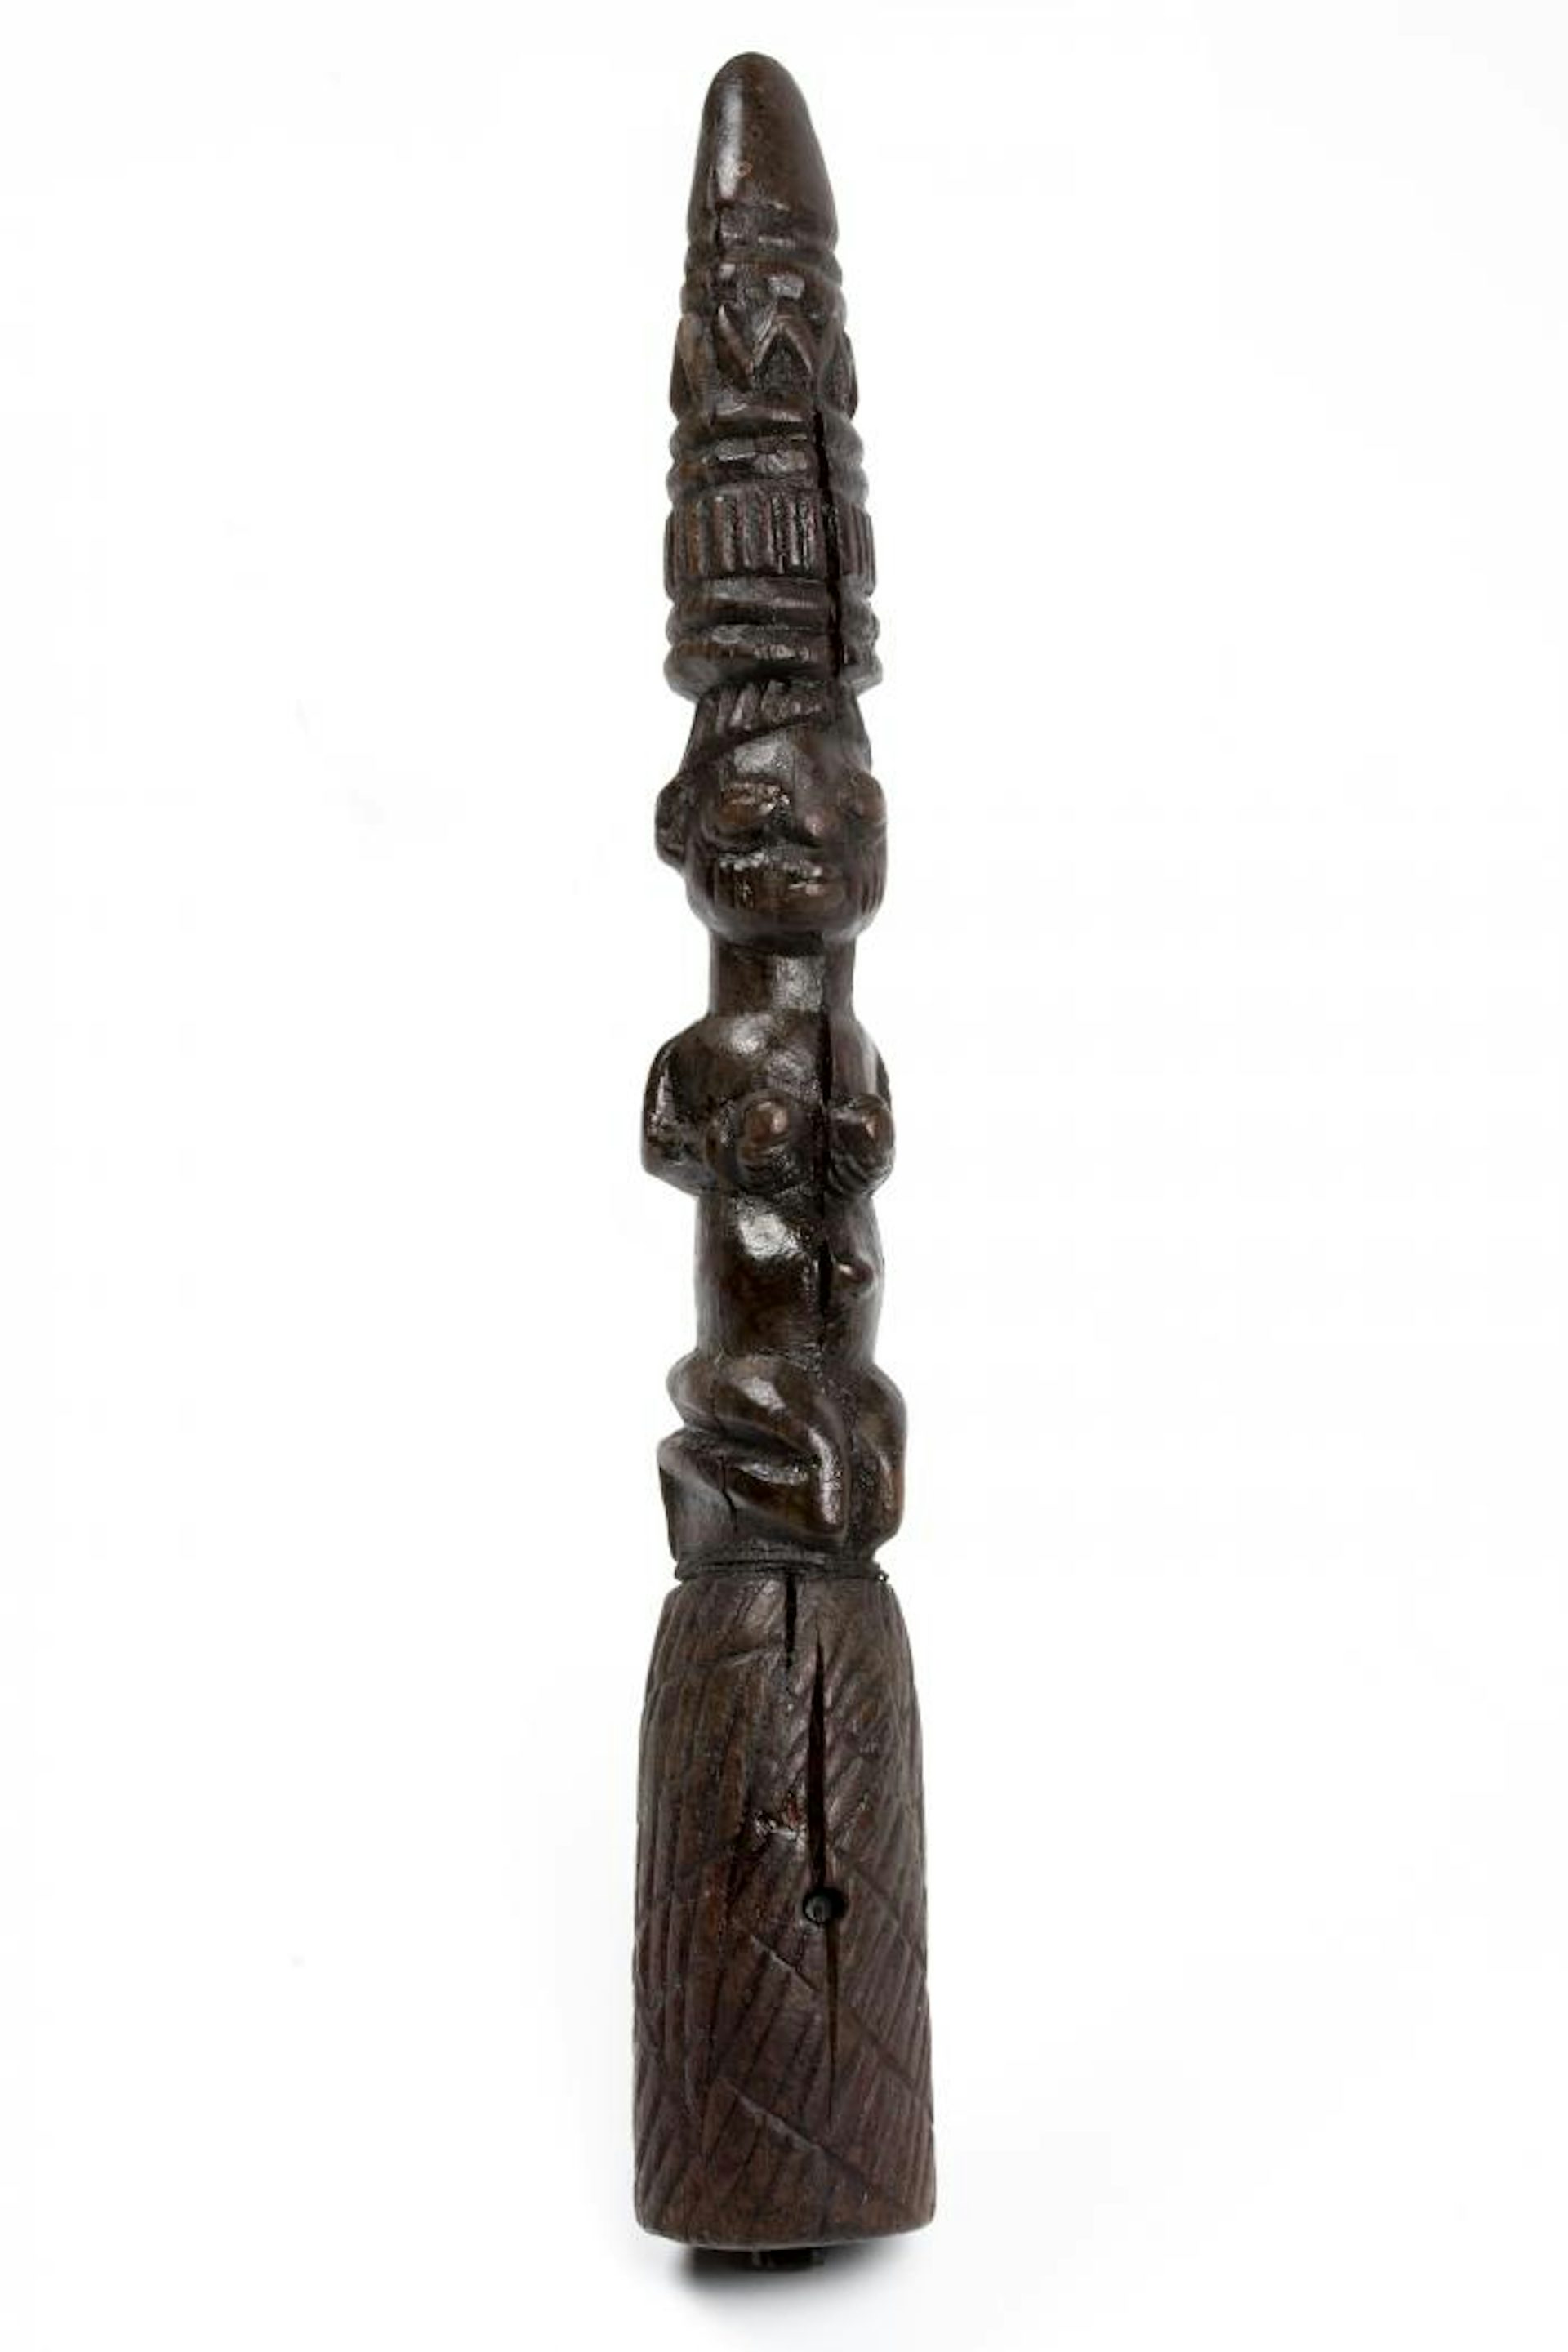 Ifa Divination Wand by Yoruba artist (20th century).